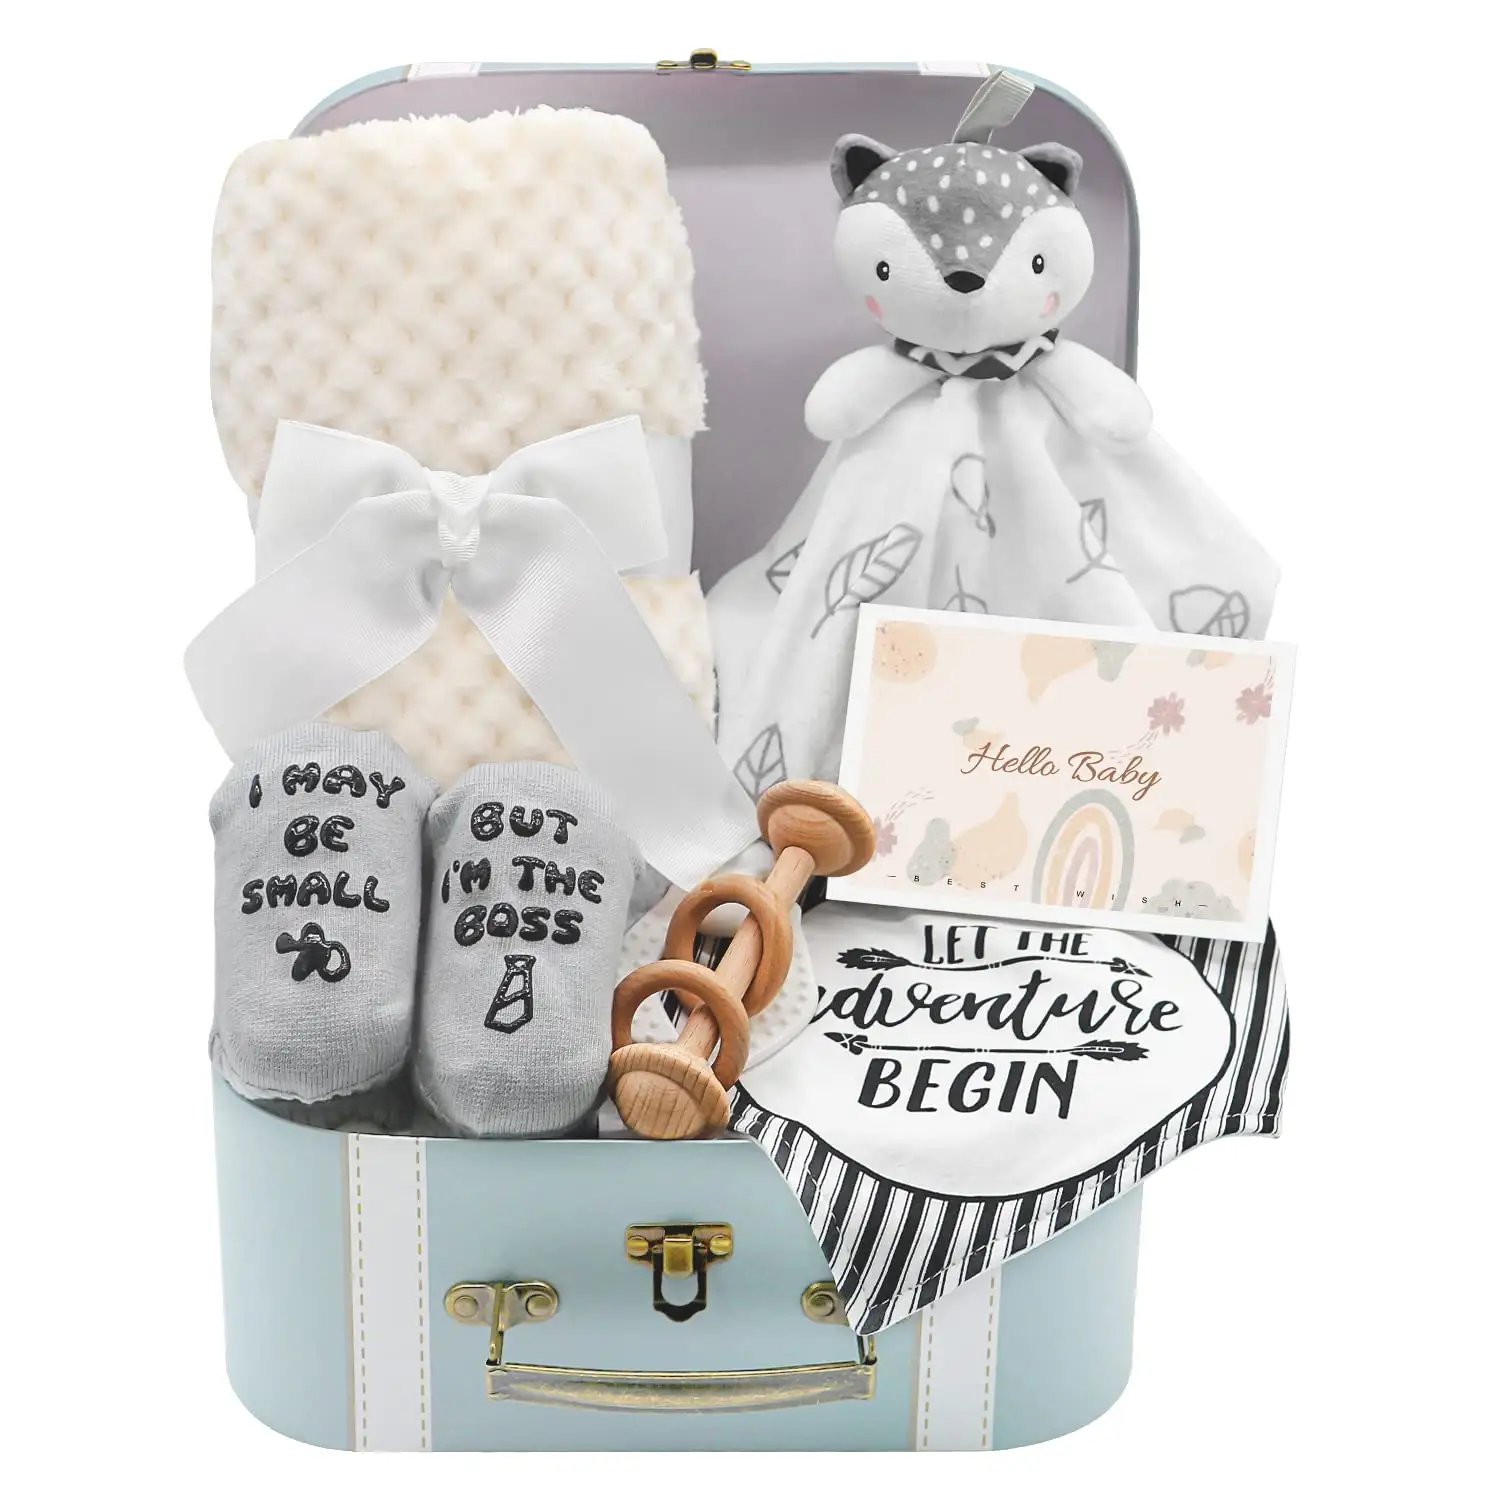 Baby Shower Gifts Basket Newborn Blanket Baby Security Blanket Wooden Rattle Toy Funny Baby Bibs Gift Set